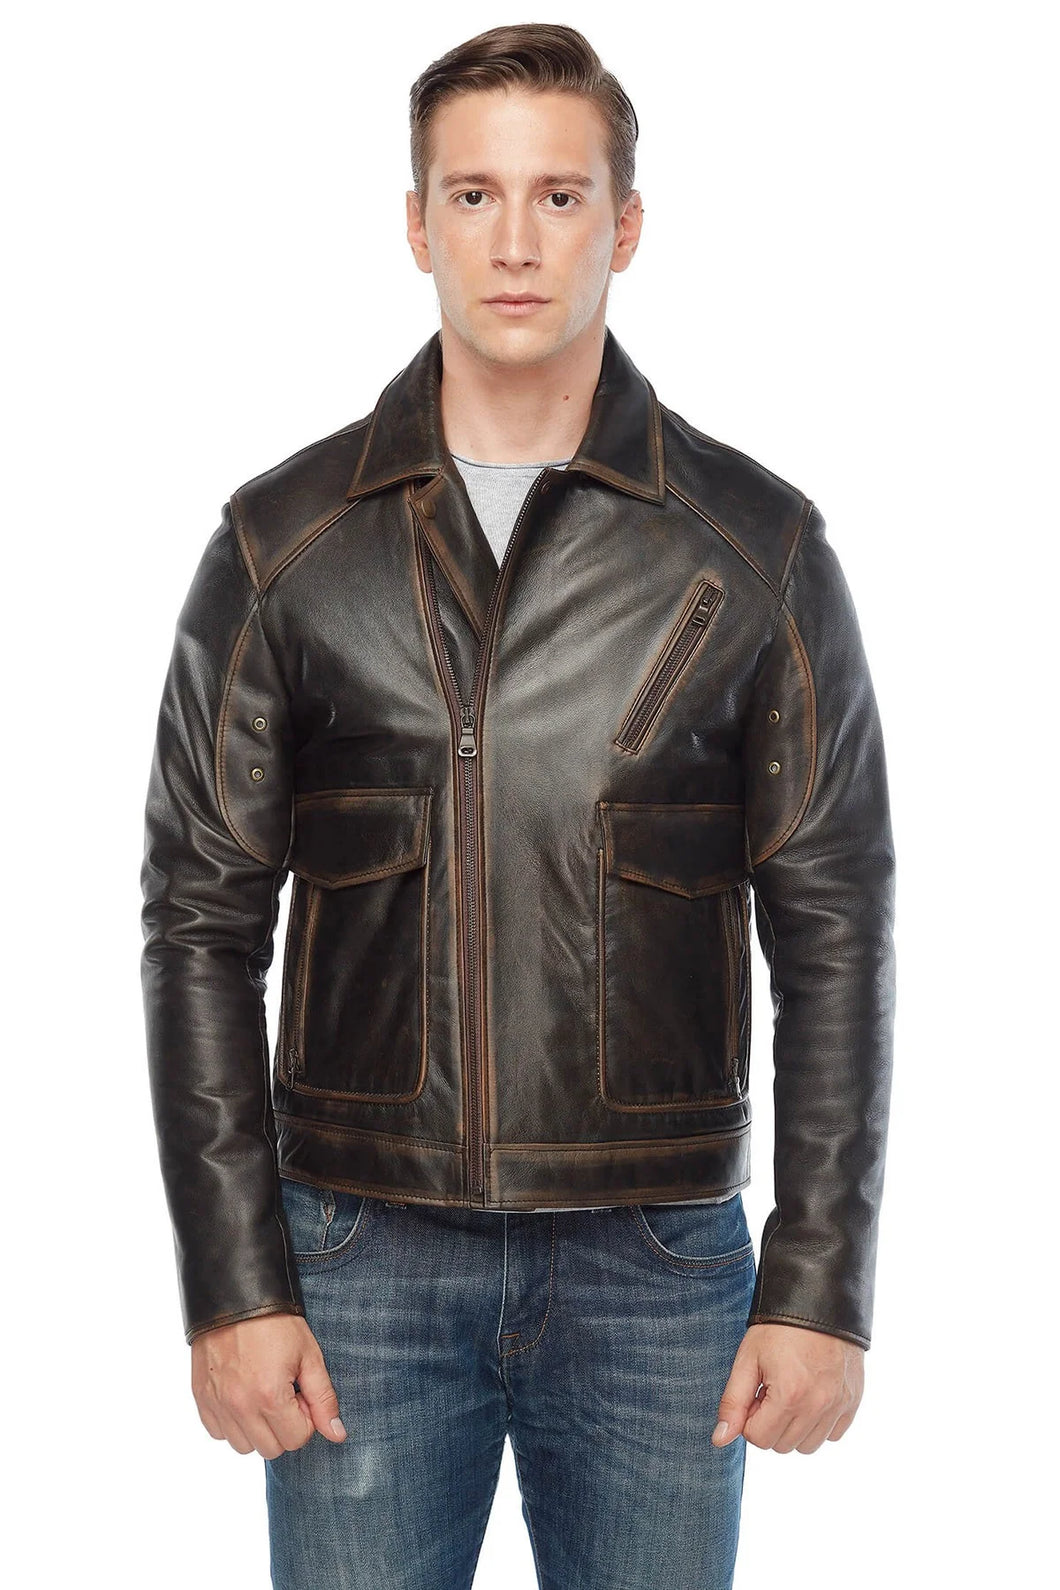 Men's Genuine Distressed Brown Leather Jacket